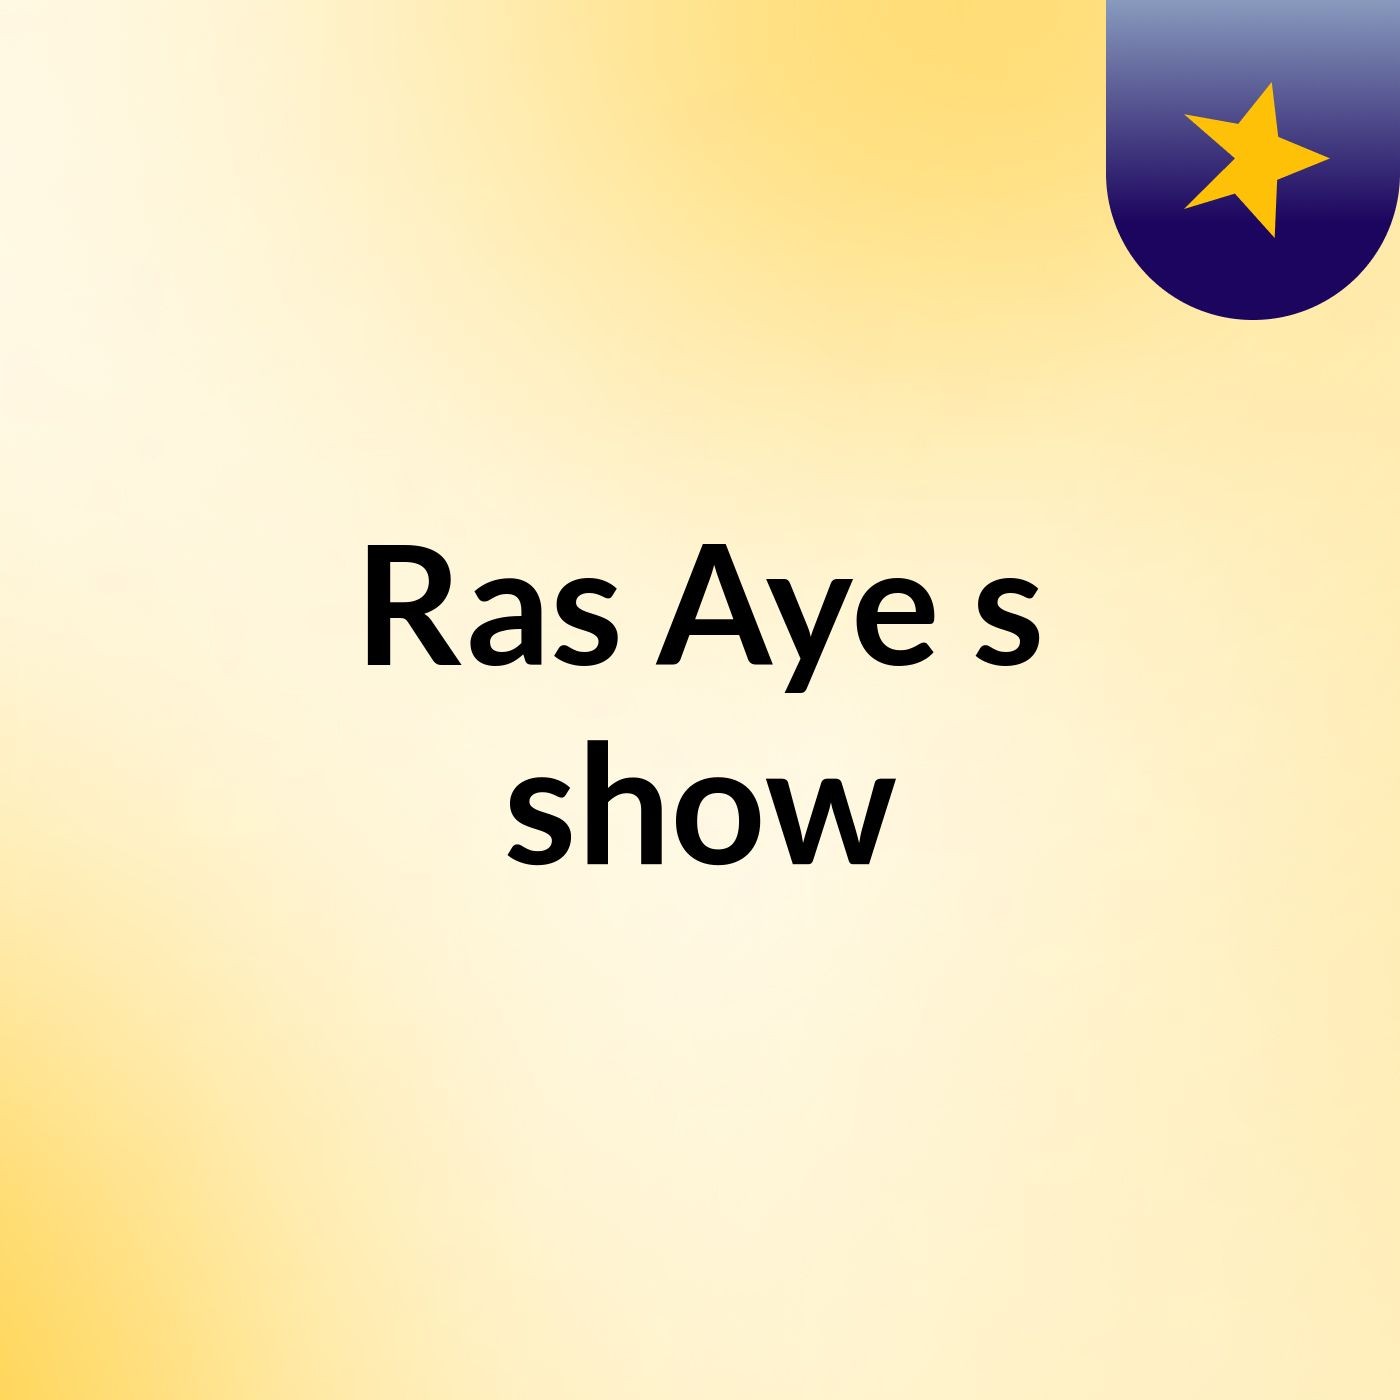 Ras Aye's show